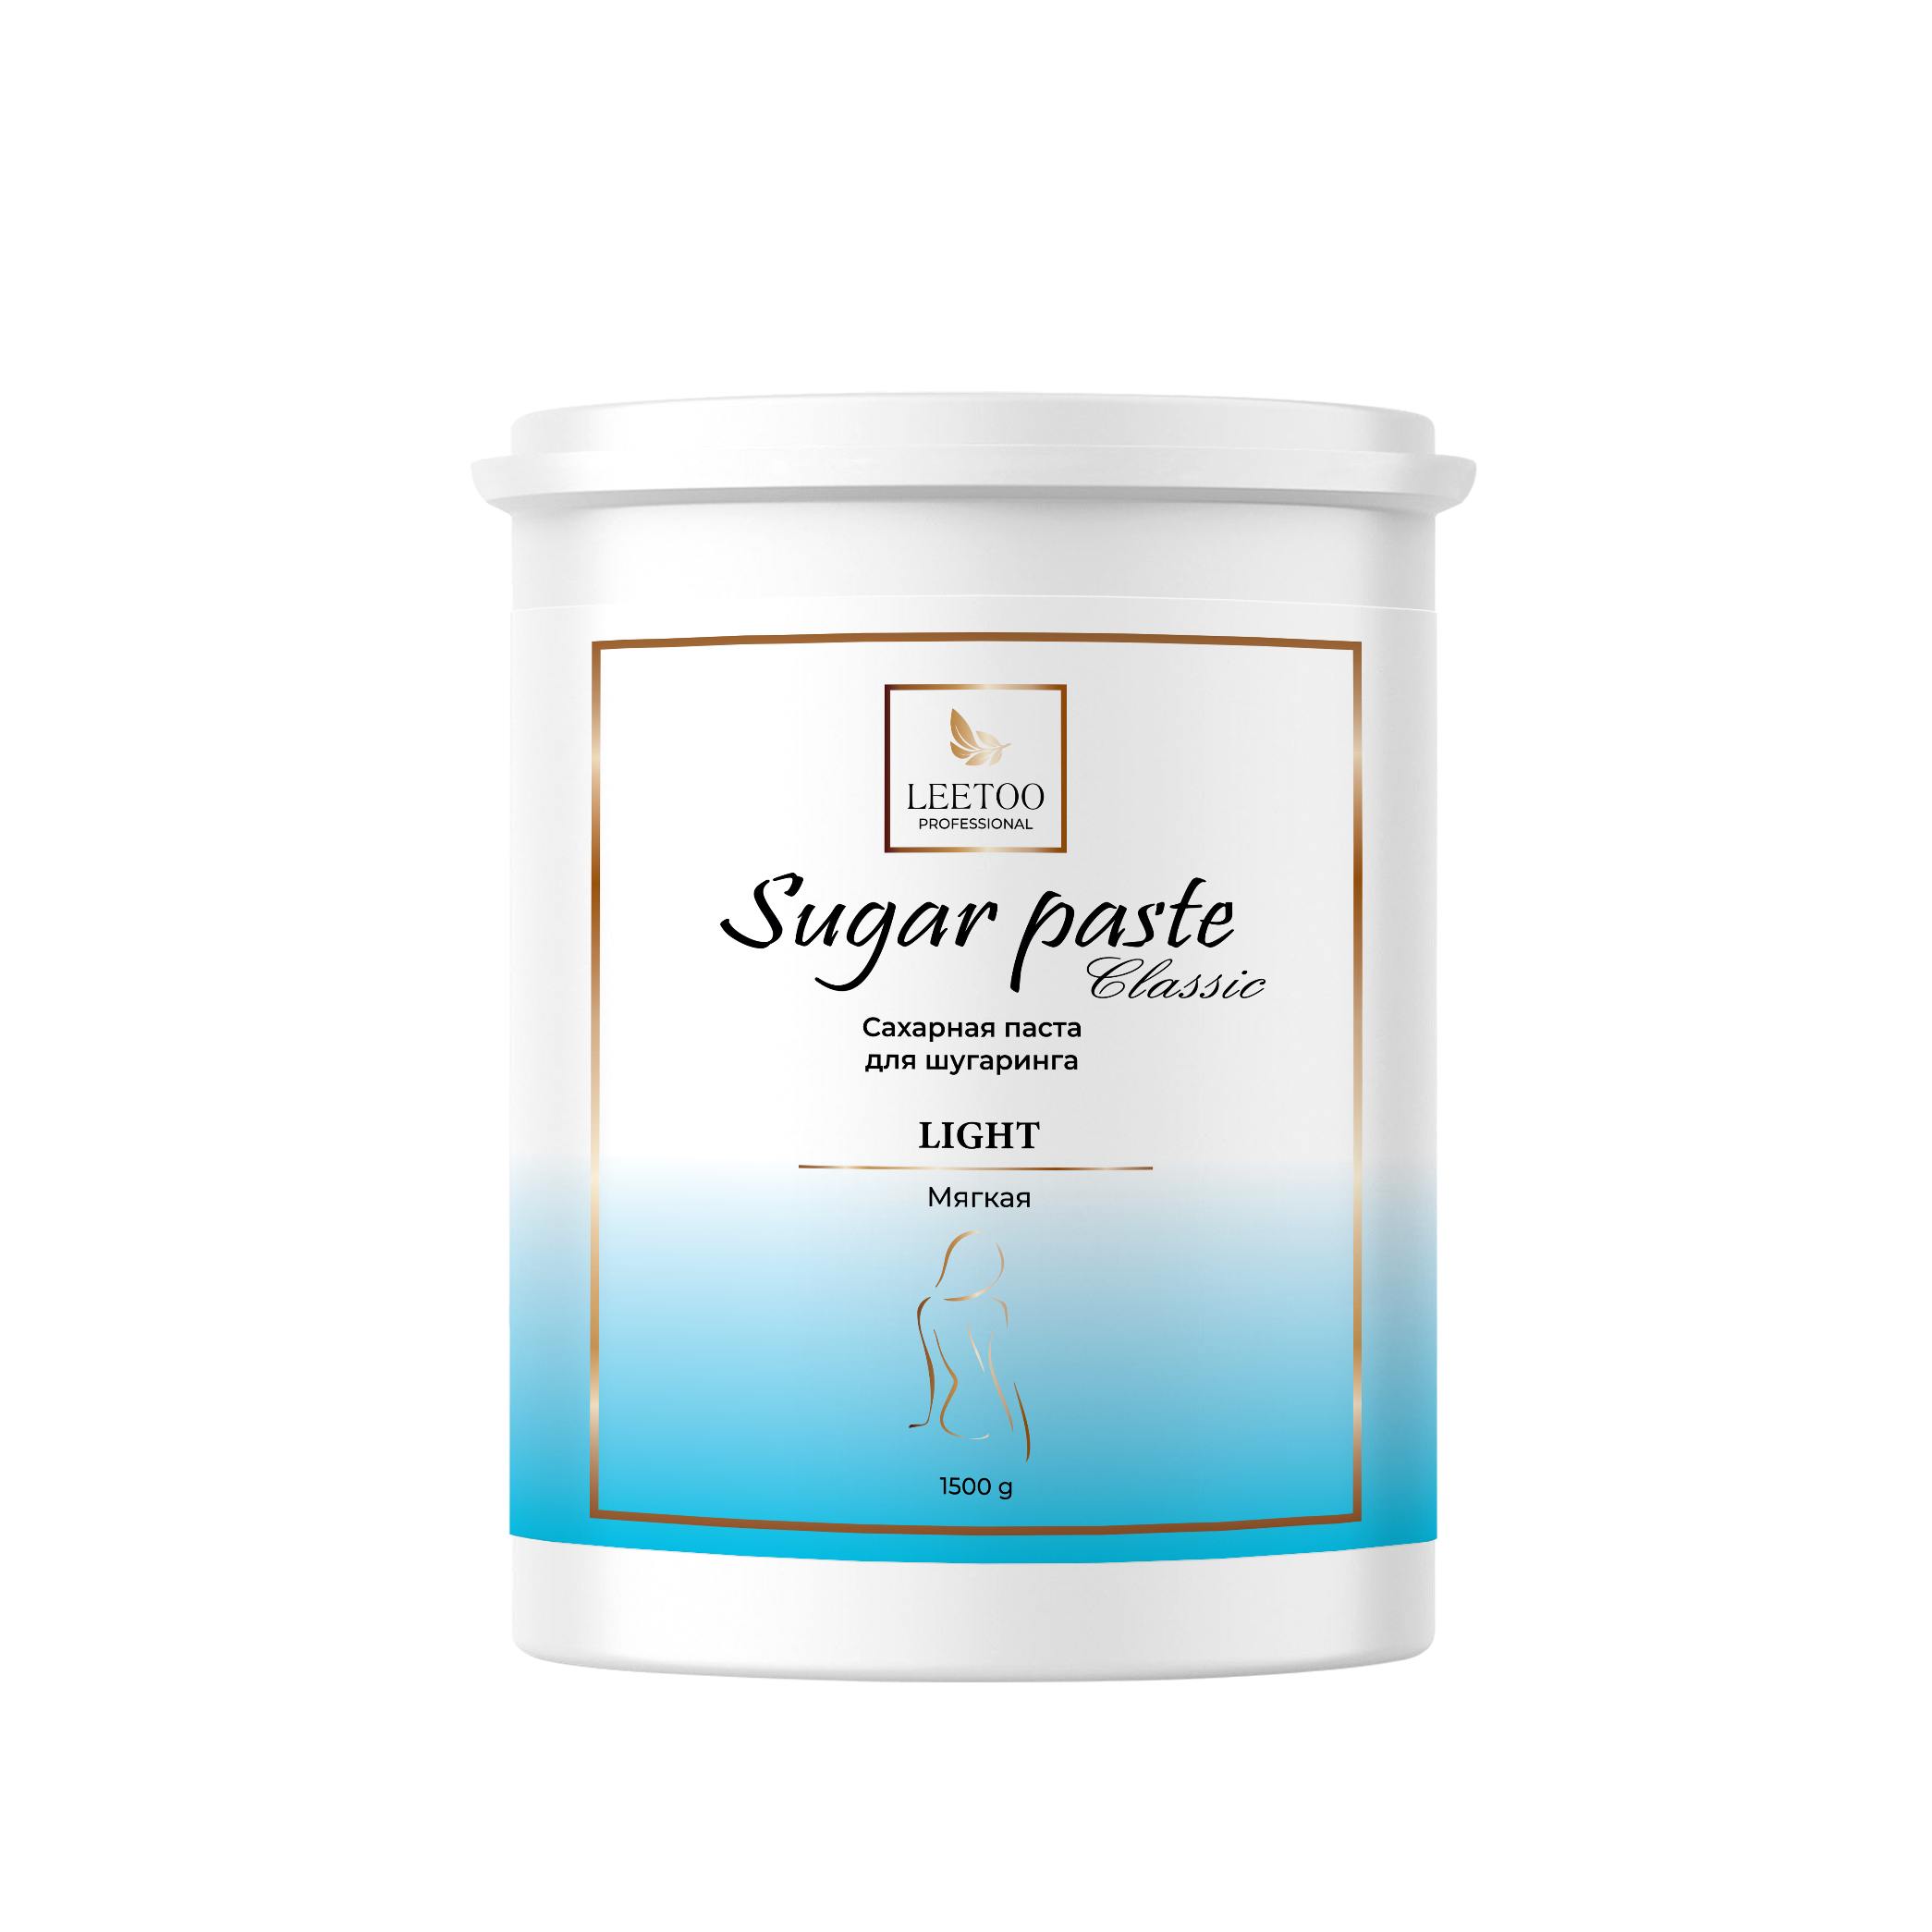 Сахарная паста для шугаринга LEETOO CLASSIC LIGHT Мягкая 1500 г. sawa паста для шугаринга бандажная гипоаллергенная 1500